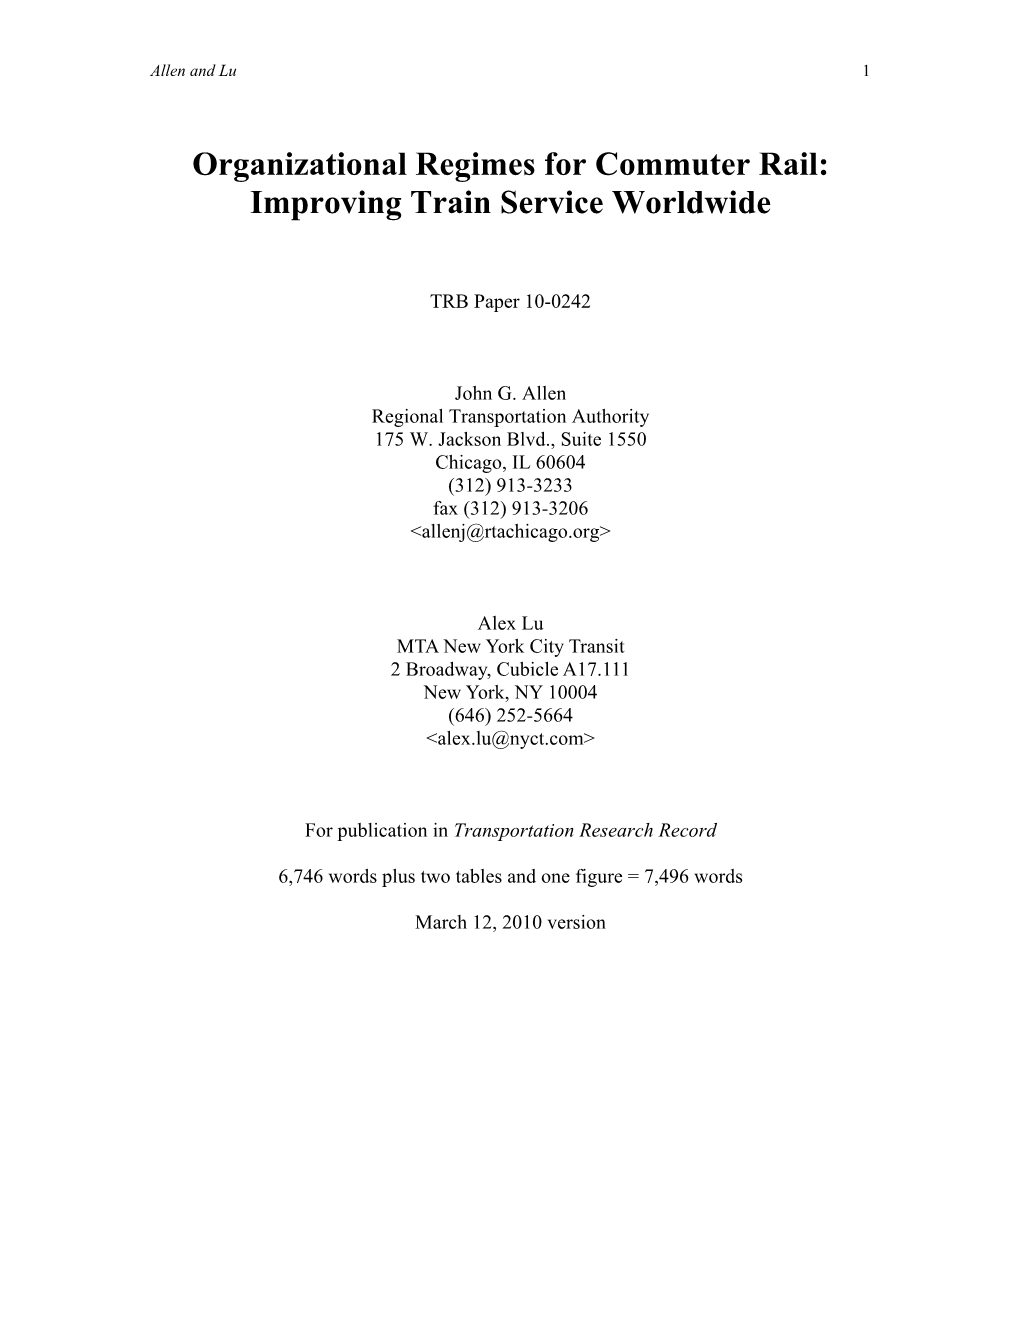 Organizational Regimes for Commuter Rail: Improving Train Service Worldwide